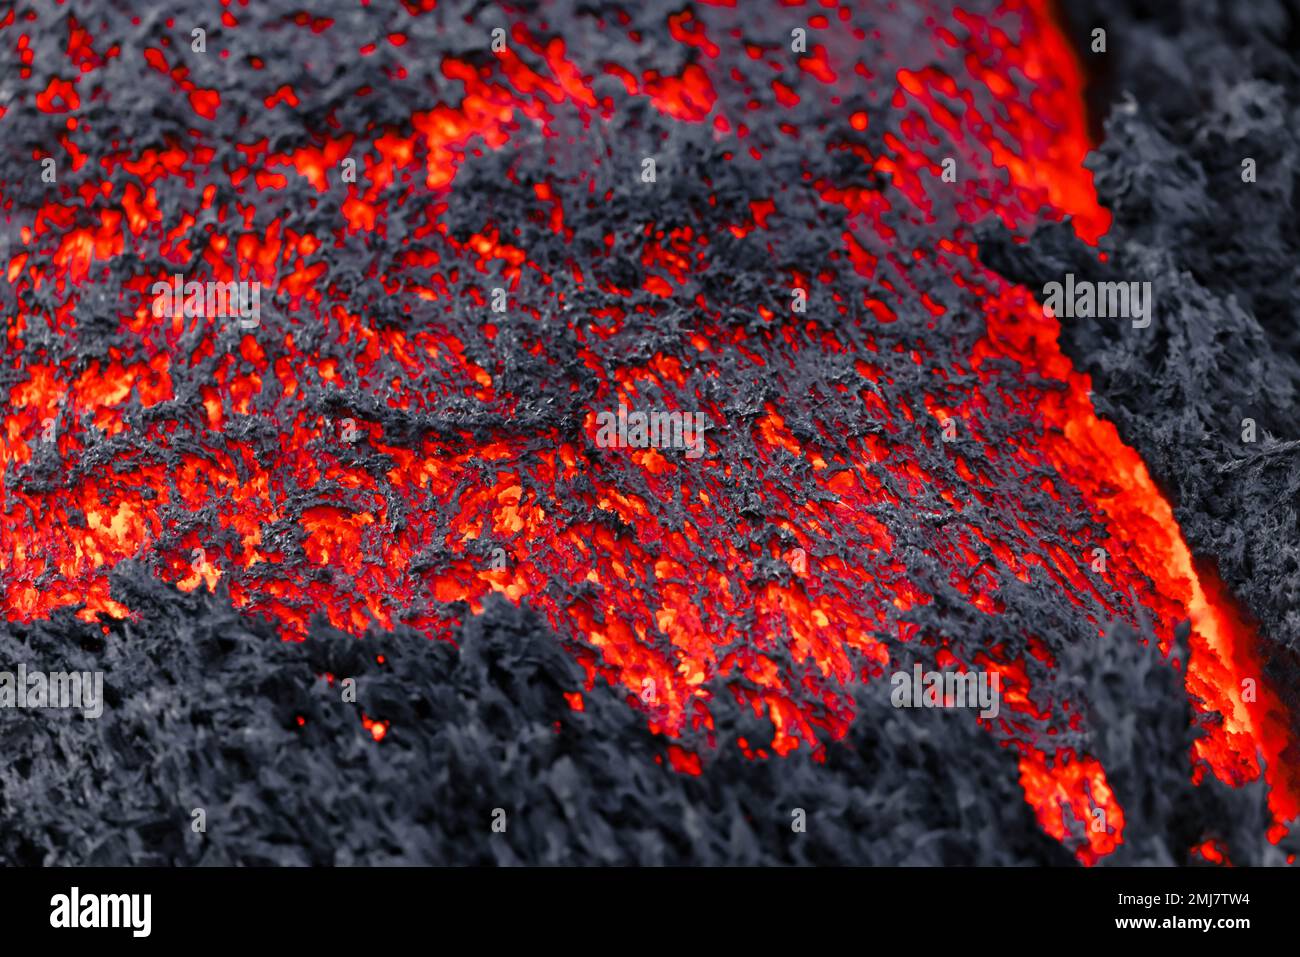 Flujo de lava en una vista de detalle - lava fundida vívida roja Foto de stock